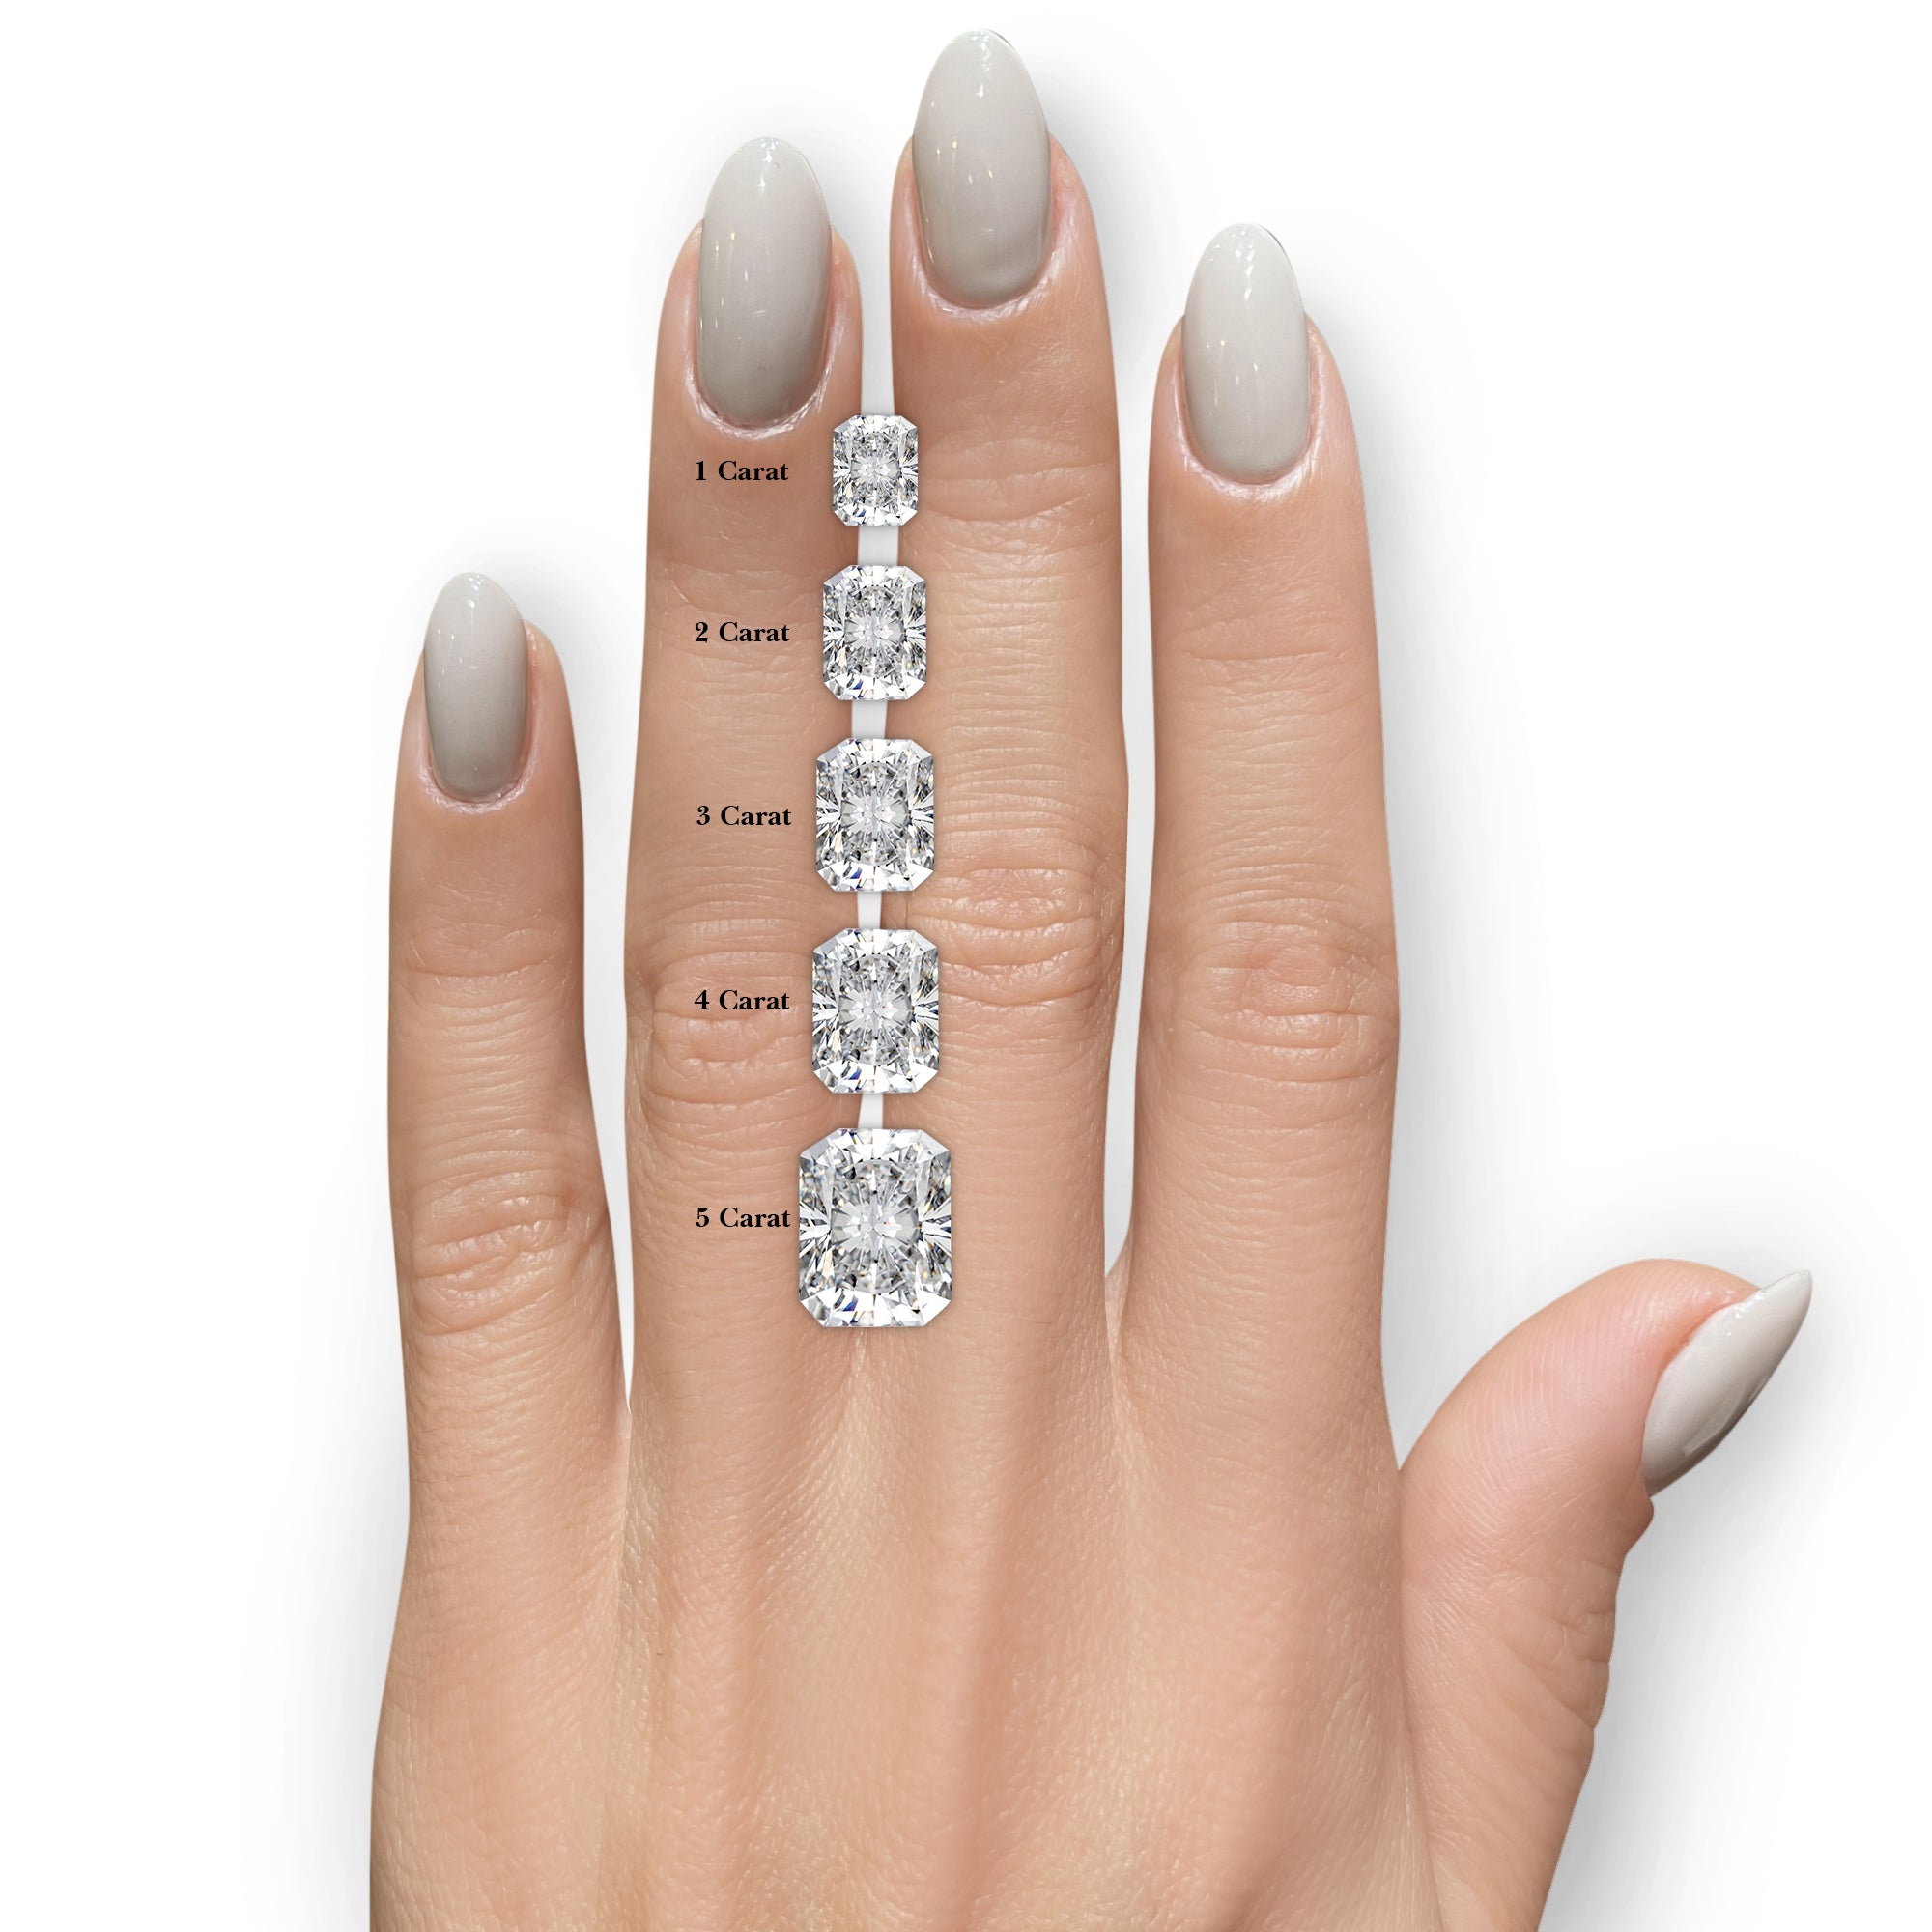 Marina Diamond Engagement Ring -18K Yellow Gold